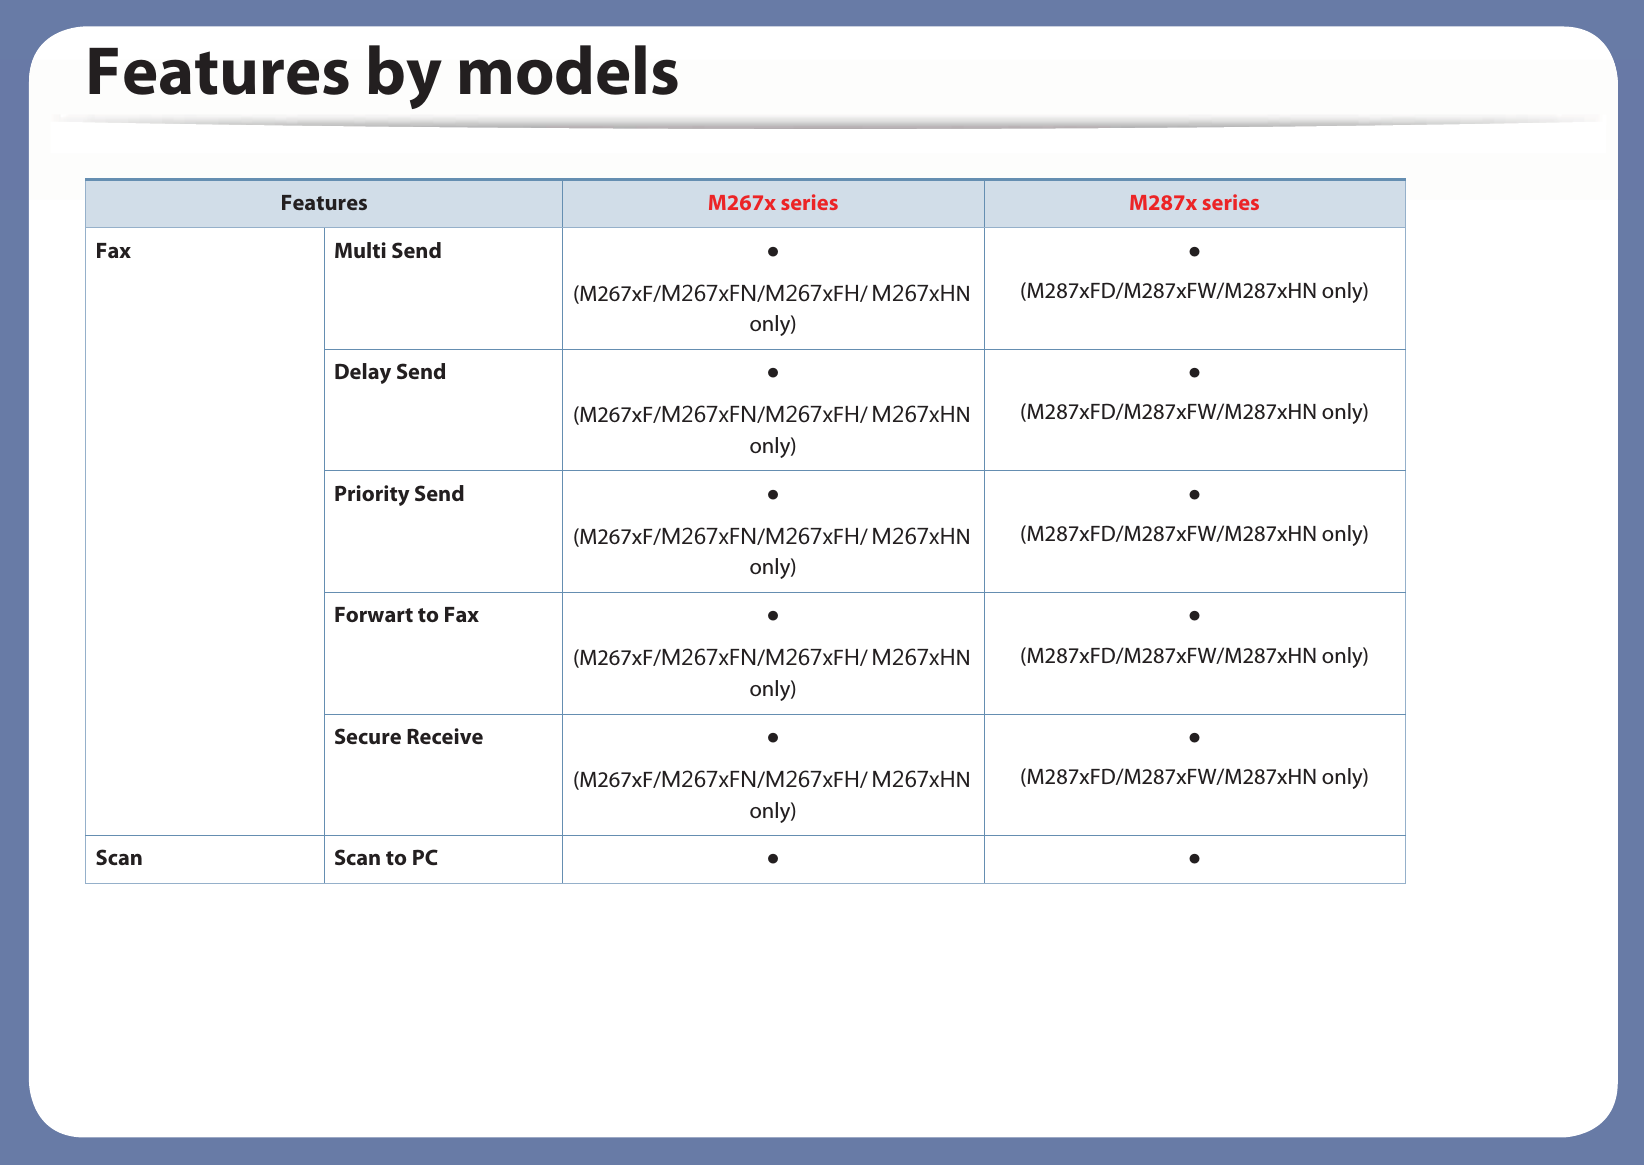 Features by modelsFax Multi Send Ɣ(M267xF/0[)1/0[F+/ 0[+N only)Ɣ(M287xFD/M287xFW/M287xHN only)Delay Send Ɣ(M267xF/0[)1/0[F+/ 0[+N only)Ɣ(M287xFD/M287xFW/M287xHN only)Priority Send Ɣ(M267xF/0[)1/0[F+/ 0[+N only)Ɣ(M287xFD/M287xFW/M287xHN only)Forwart to Fax Ɣ(M267xF/0[)1/0[F+/ 0[+N only)Ɣ(M287xFD/M287xFW/M287xHN only)Secure Receive Ɣ(M267xF/0[)1/0[F+/ 0[+N only)Ɣ(M287xFD/M287xFW/M287xHN only)Scan Scan to PC Ɣ ƔFeatures M267x series M287x series